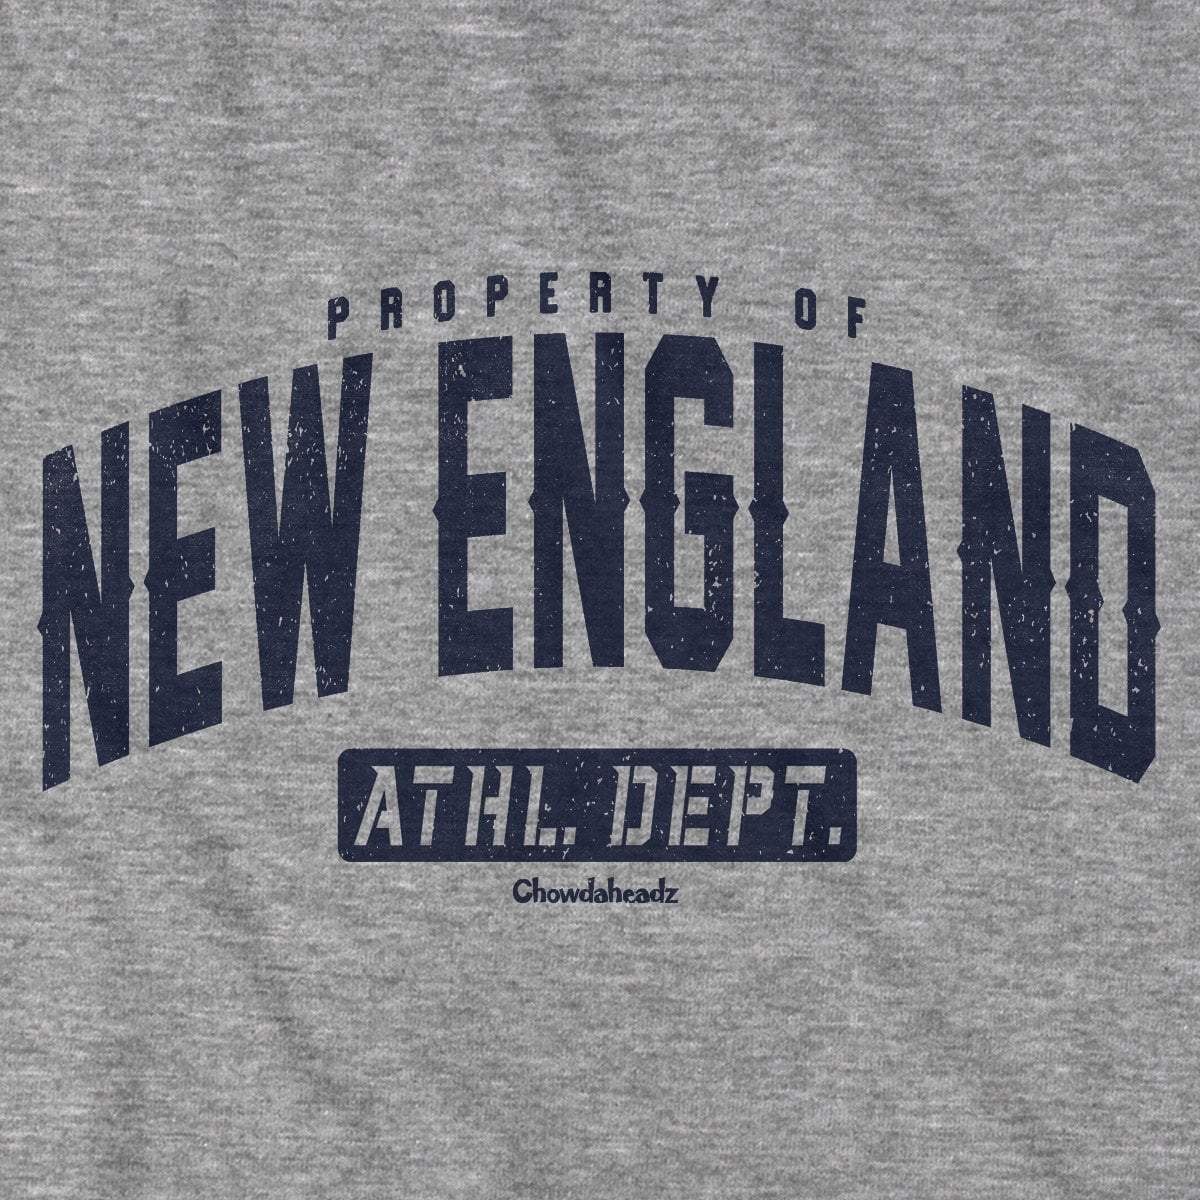 Property Of New England T-Shirt - Chowdaheadz